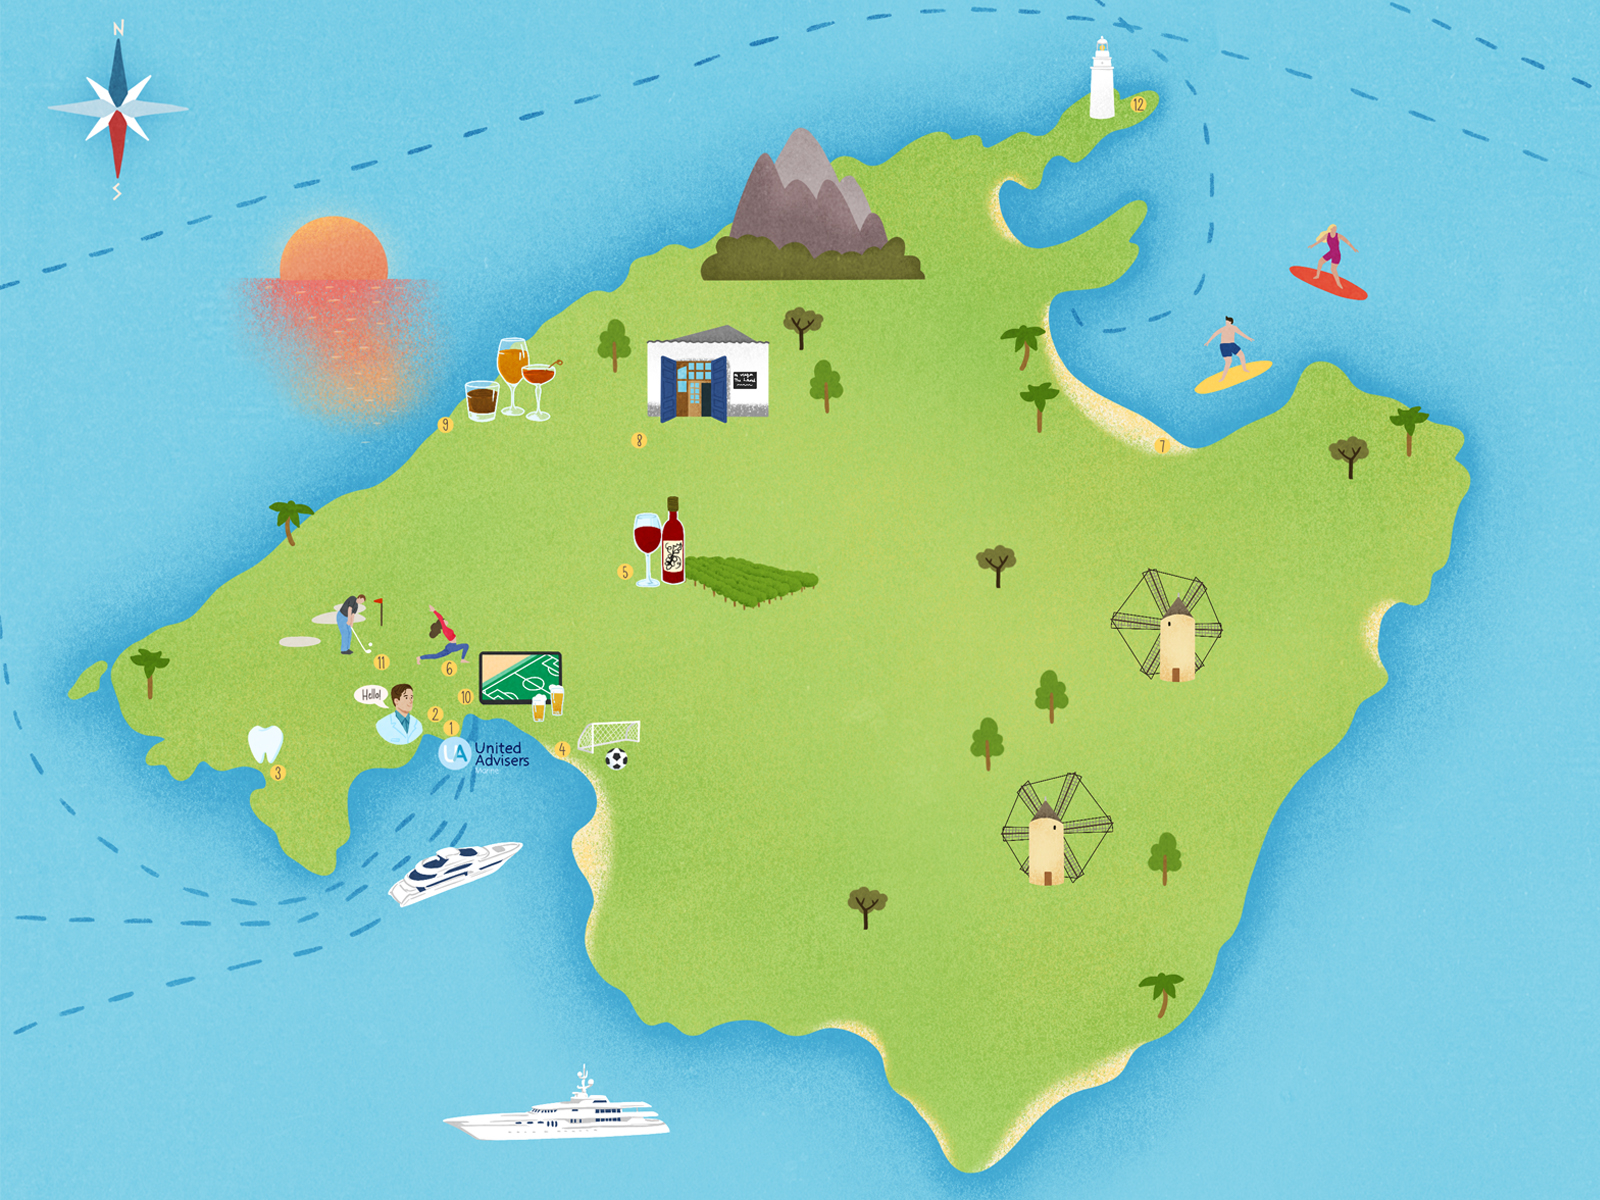 Map Of Mallorca Illustration Navigation Map With Landmarks By Tanya Keiko On Dribbble 4246